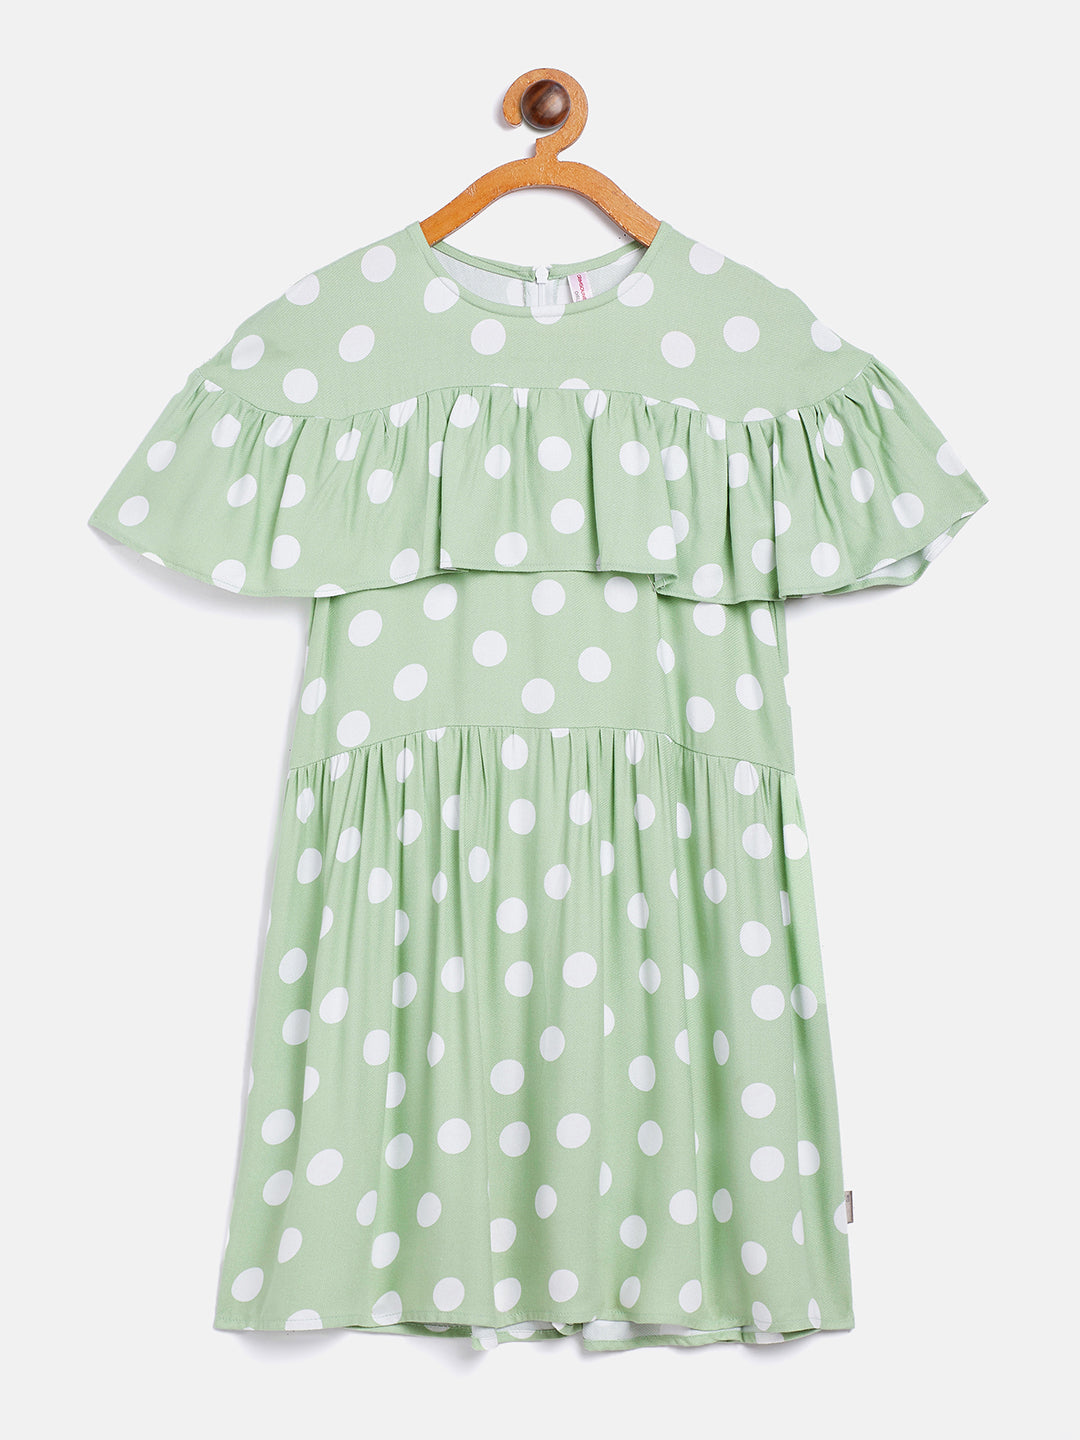 Mint Green Polka Dots Fit and Flare Dress - Girls Dress